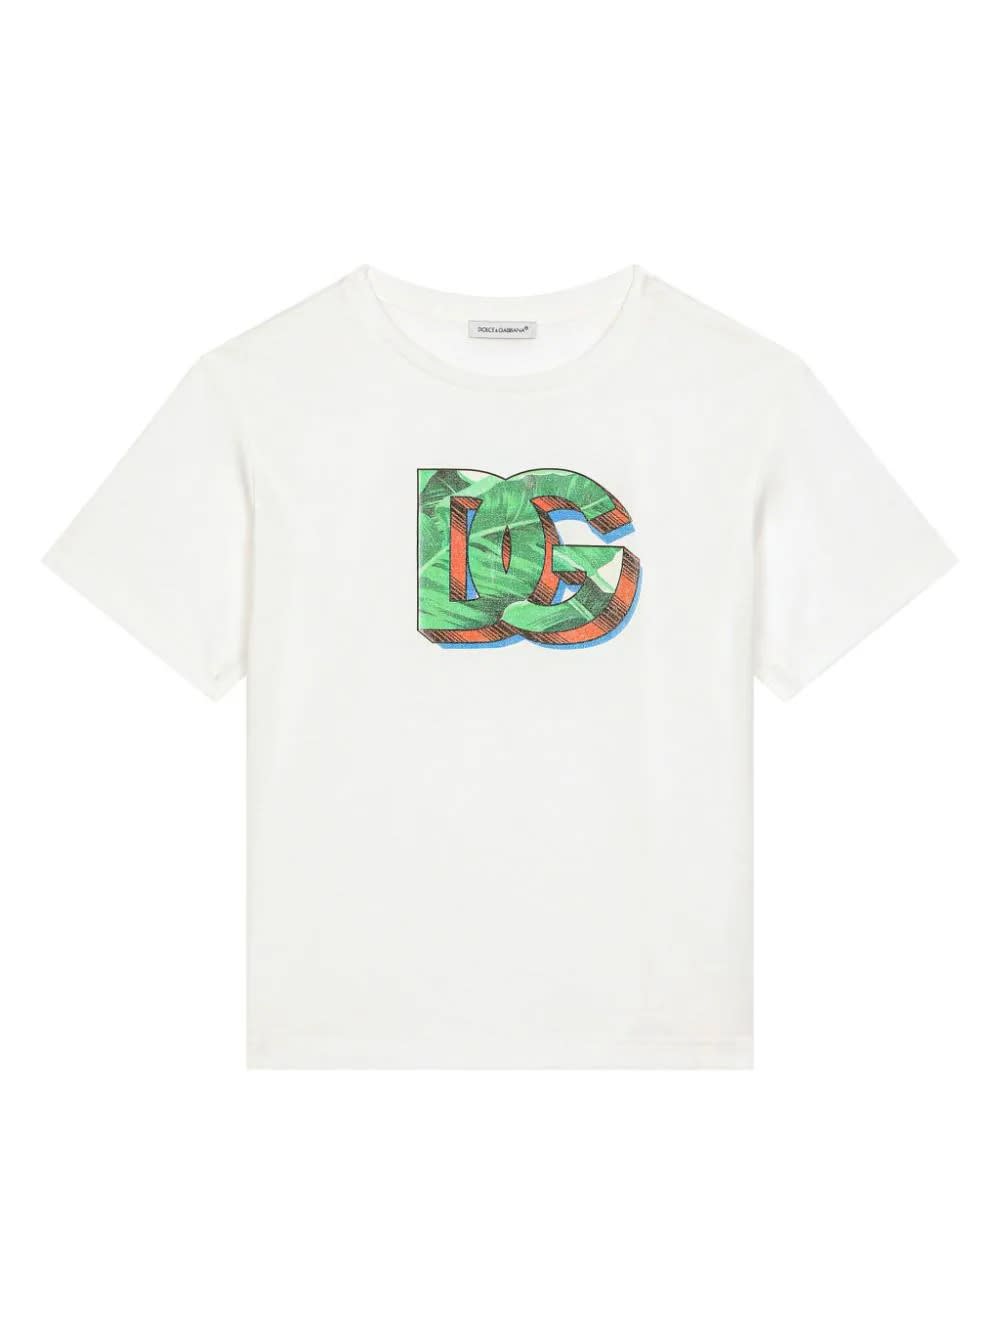 Dolce & Gabbana White T-shirt With Dg Logo Print